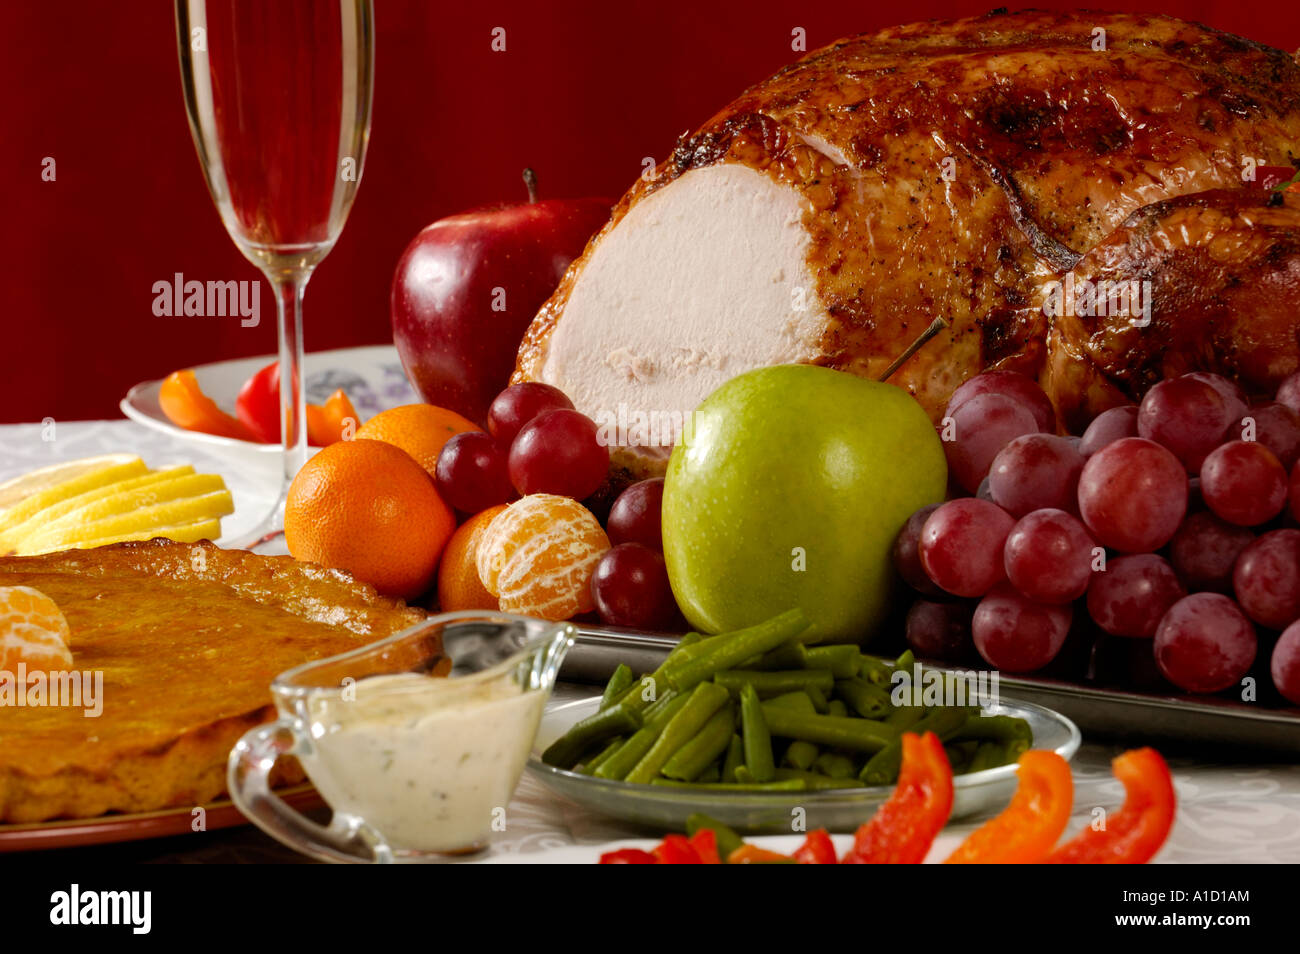 Thanksgiving Turkey Festive Food Still life Stock Photo